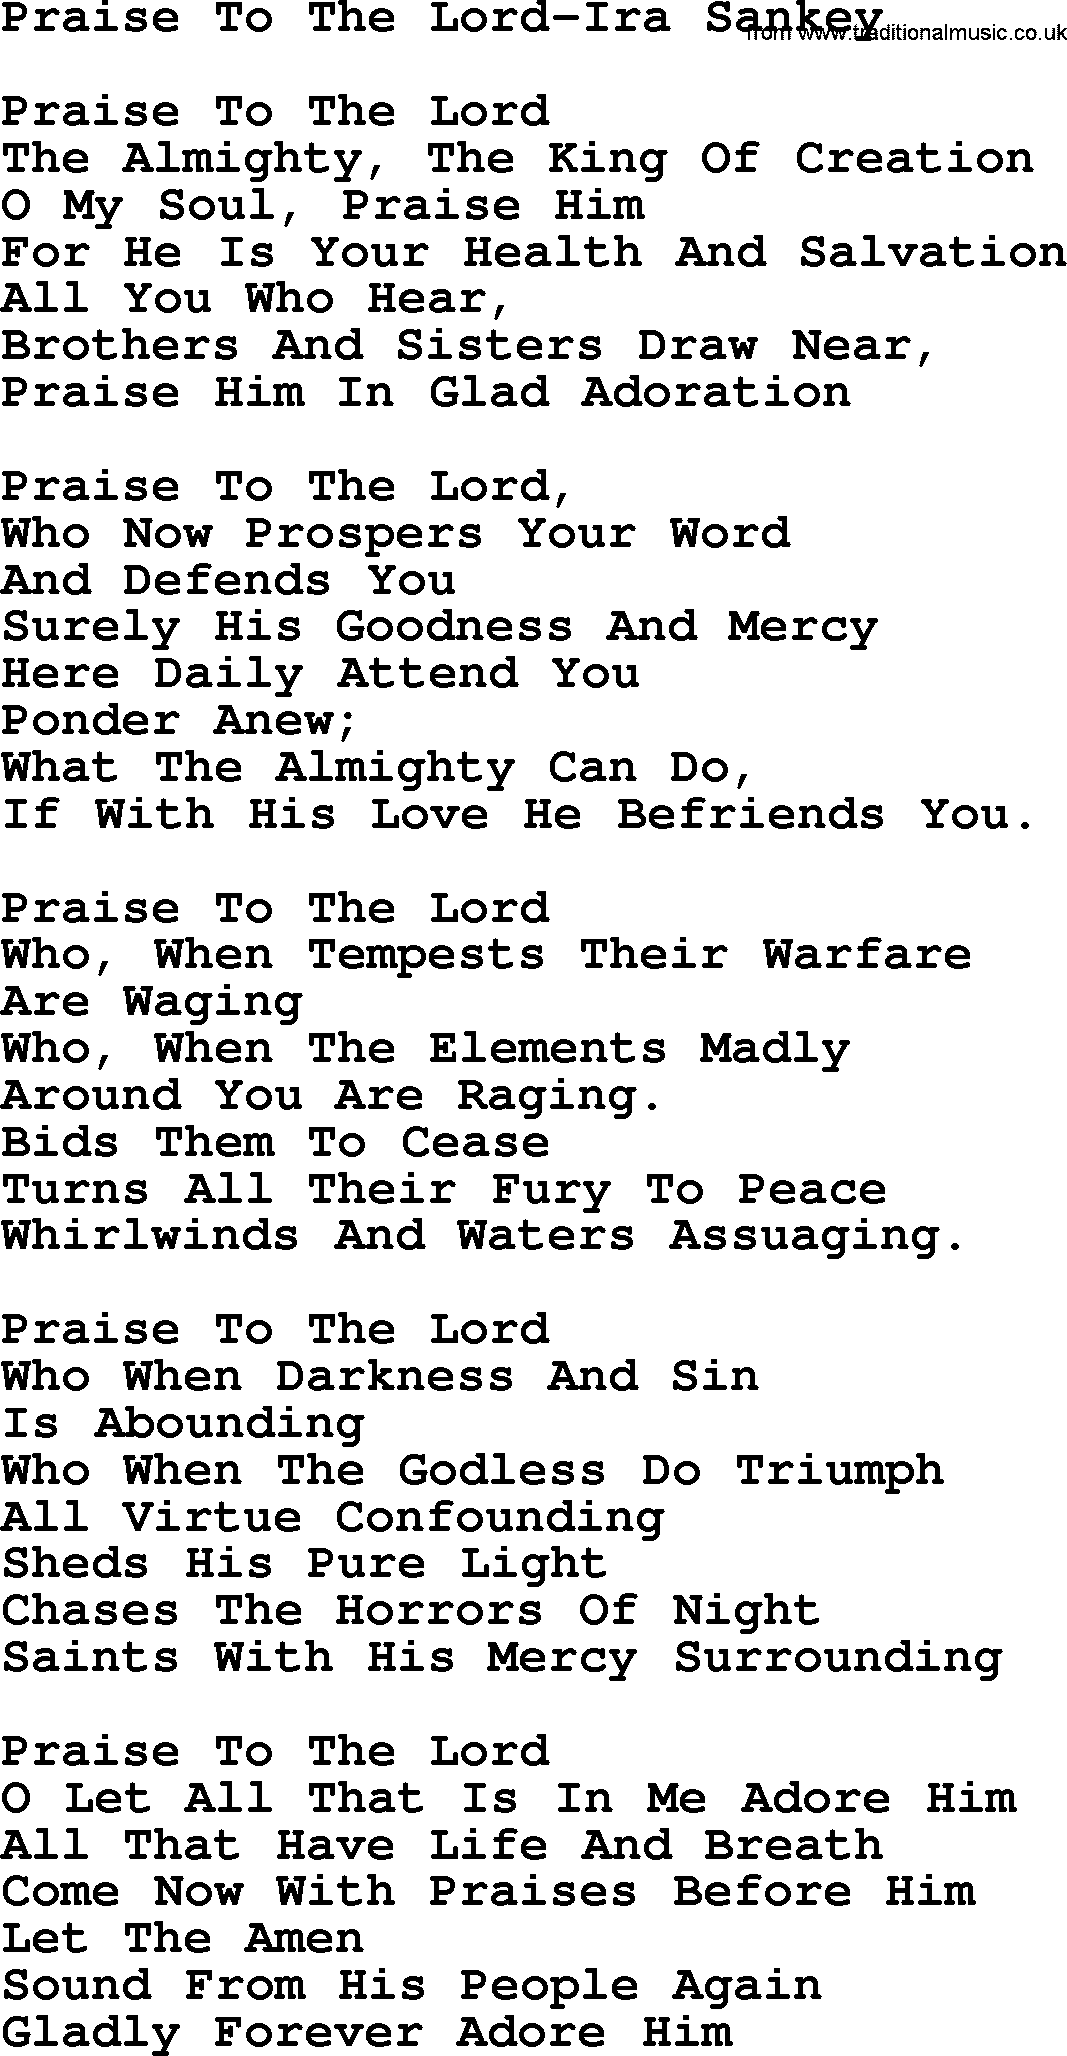 Ira Sankey hymn: Praise To The Lord-Ira Sankey, lyrics